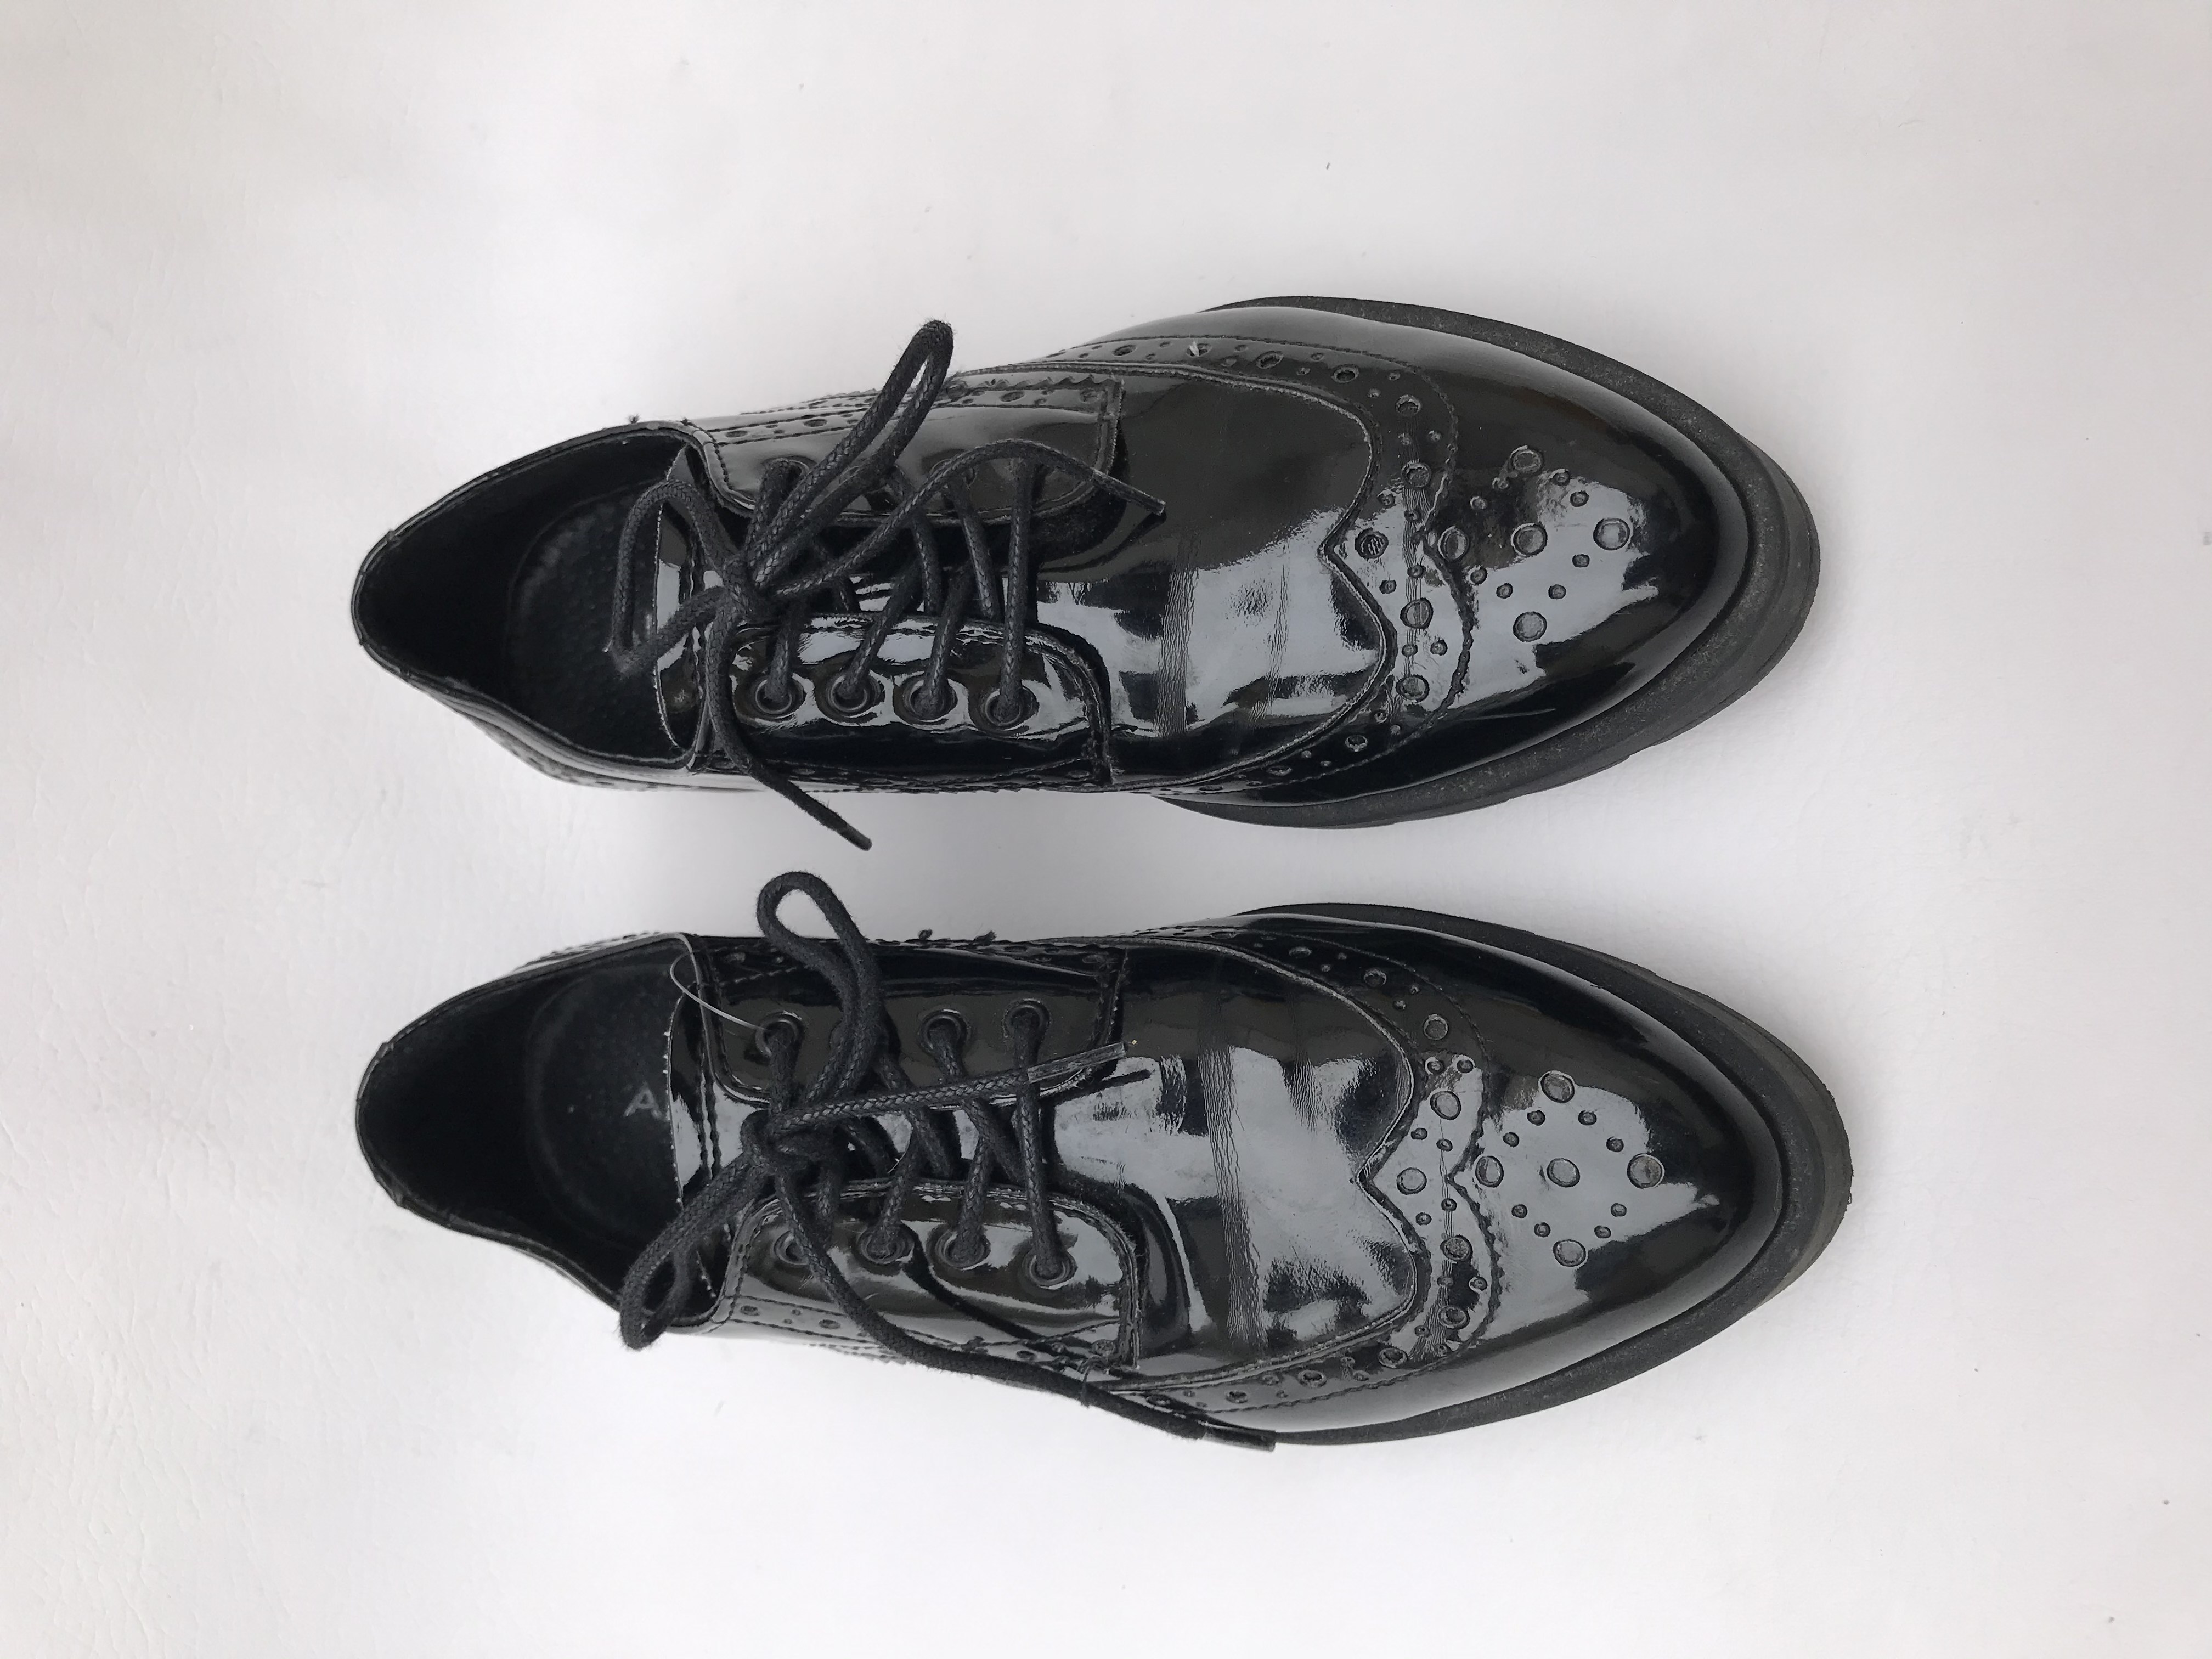 Zapatos Aldo modelo oxford negros de charol, taco 3cm. Estado 7/10 Precio original S/ 230